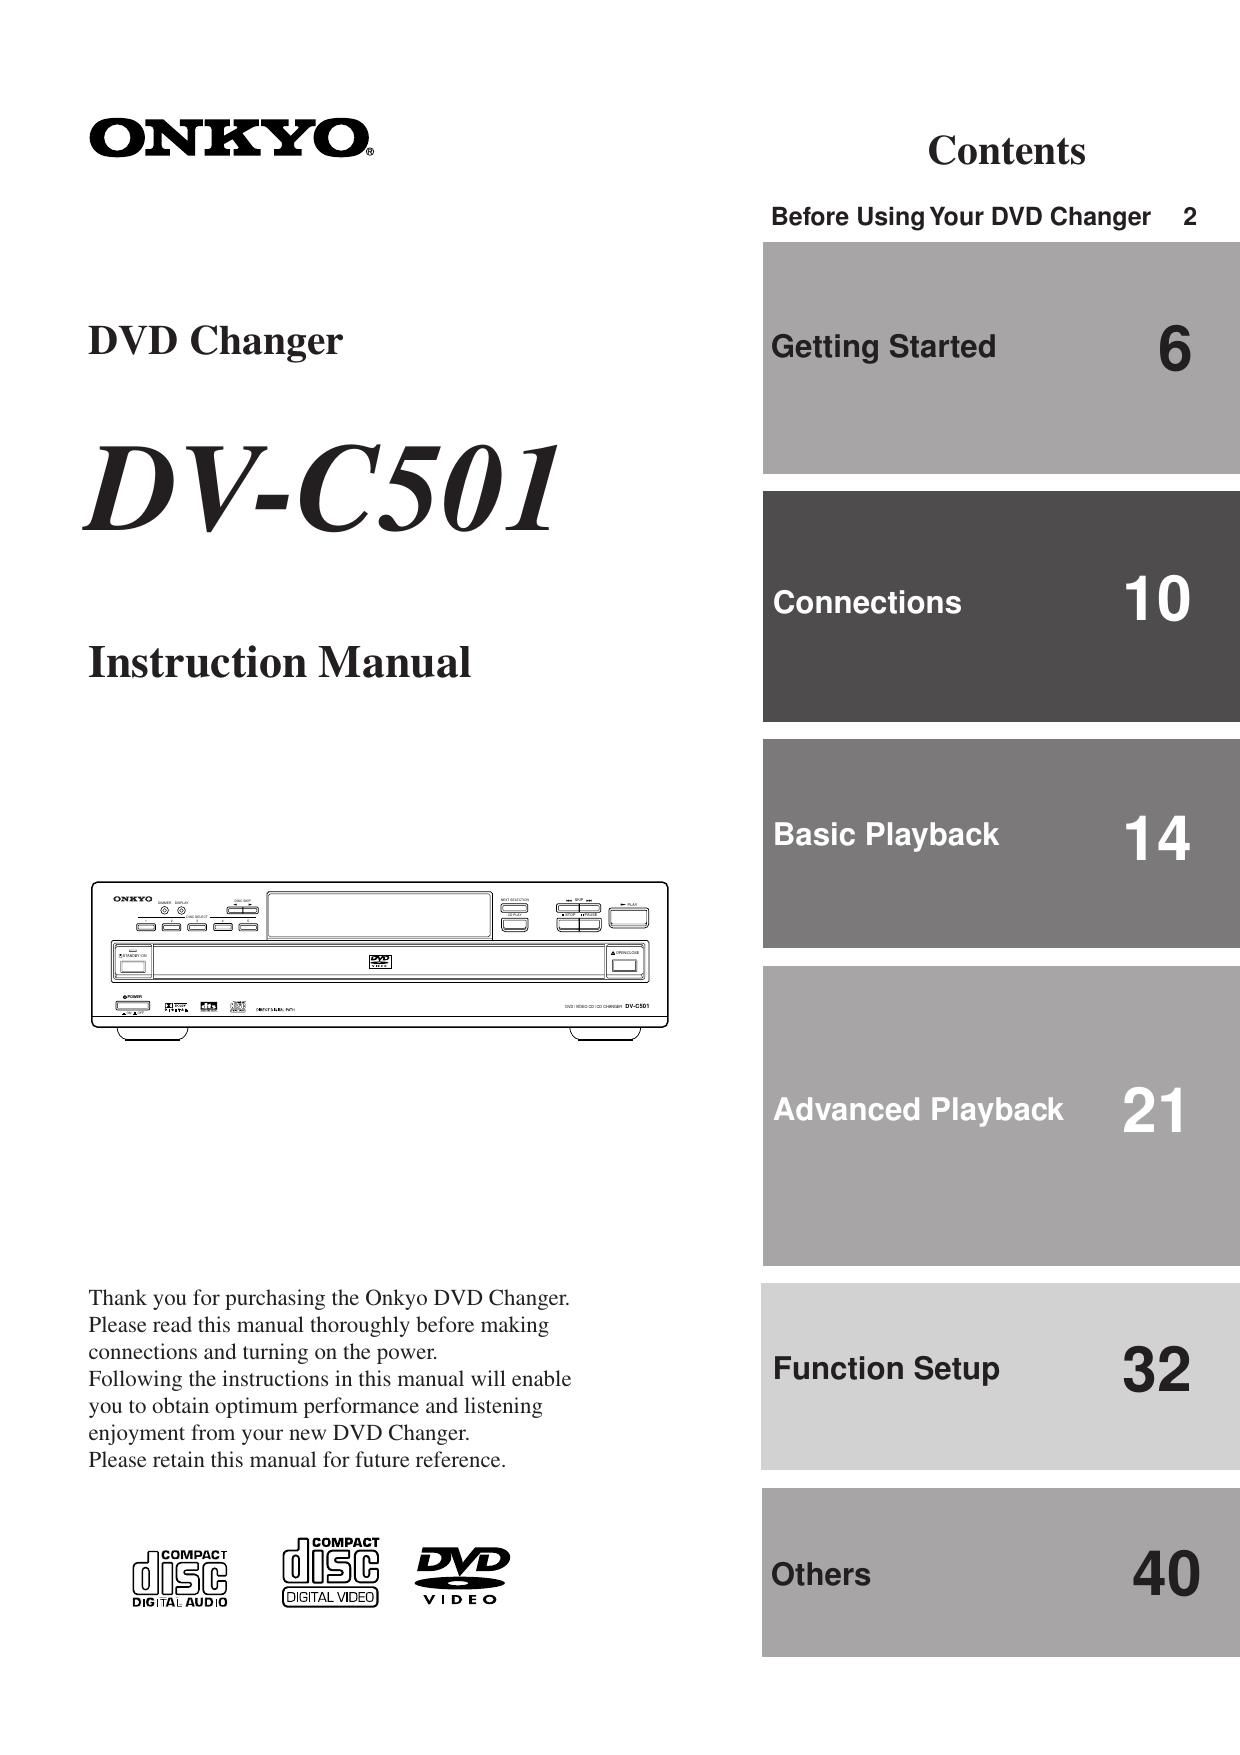 Onkyo DVC 501 Owners Manual